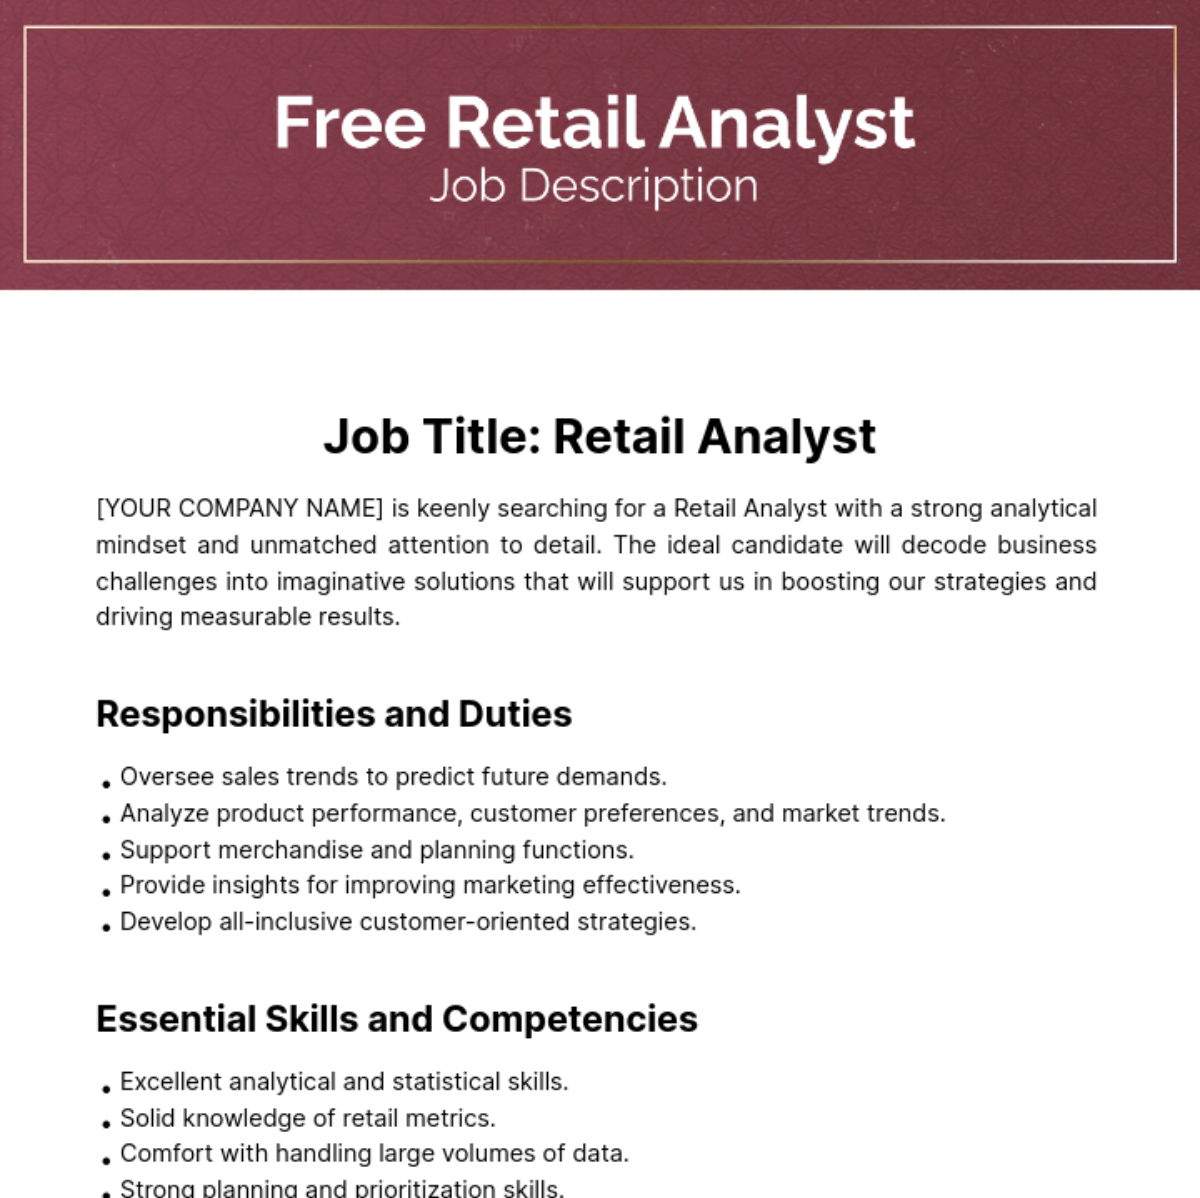 Free Retail Analyst Job Description Template